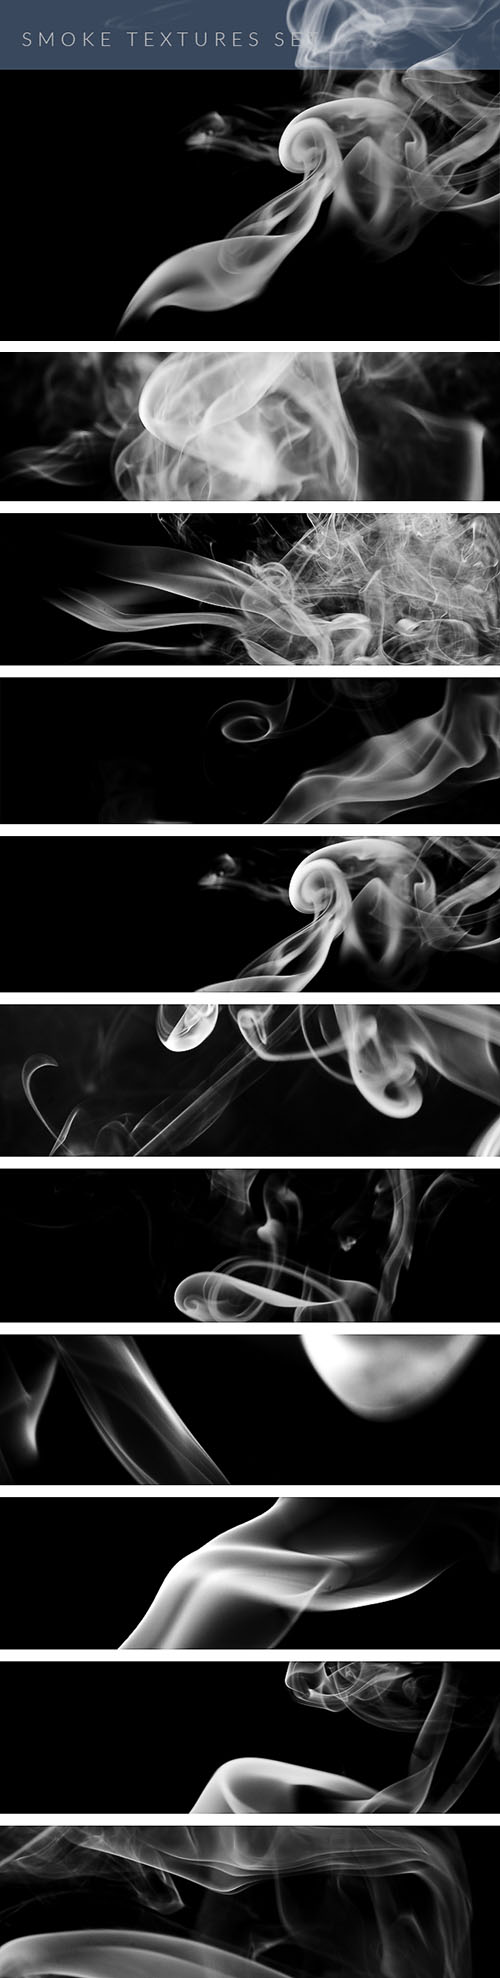 Smoke Textures Set 1